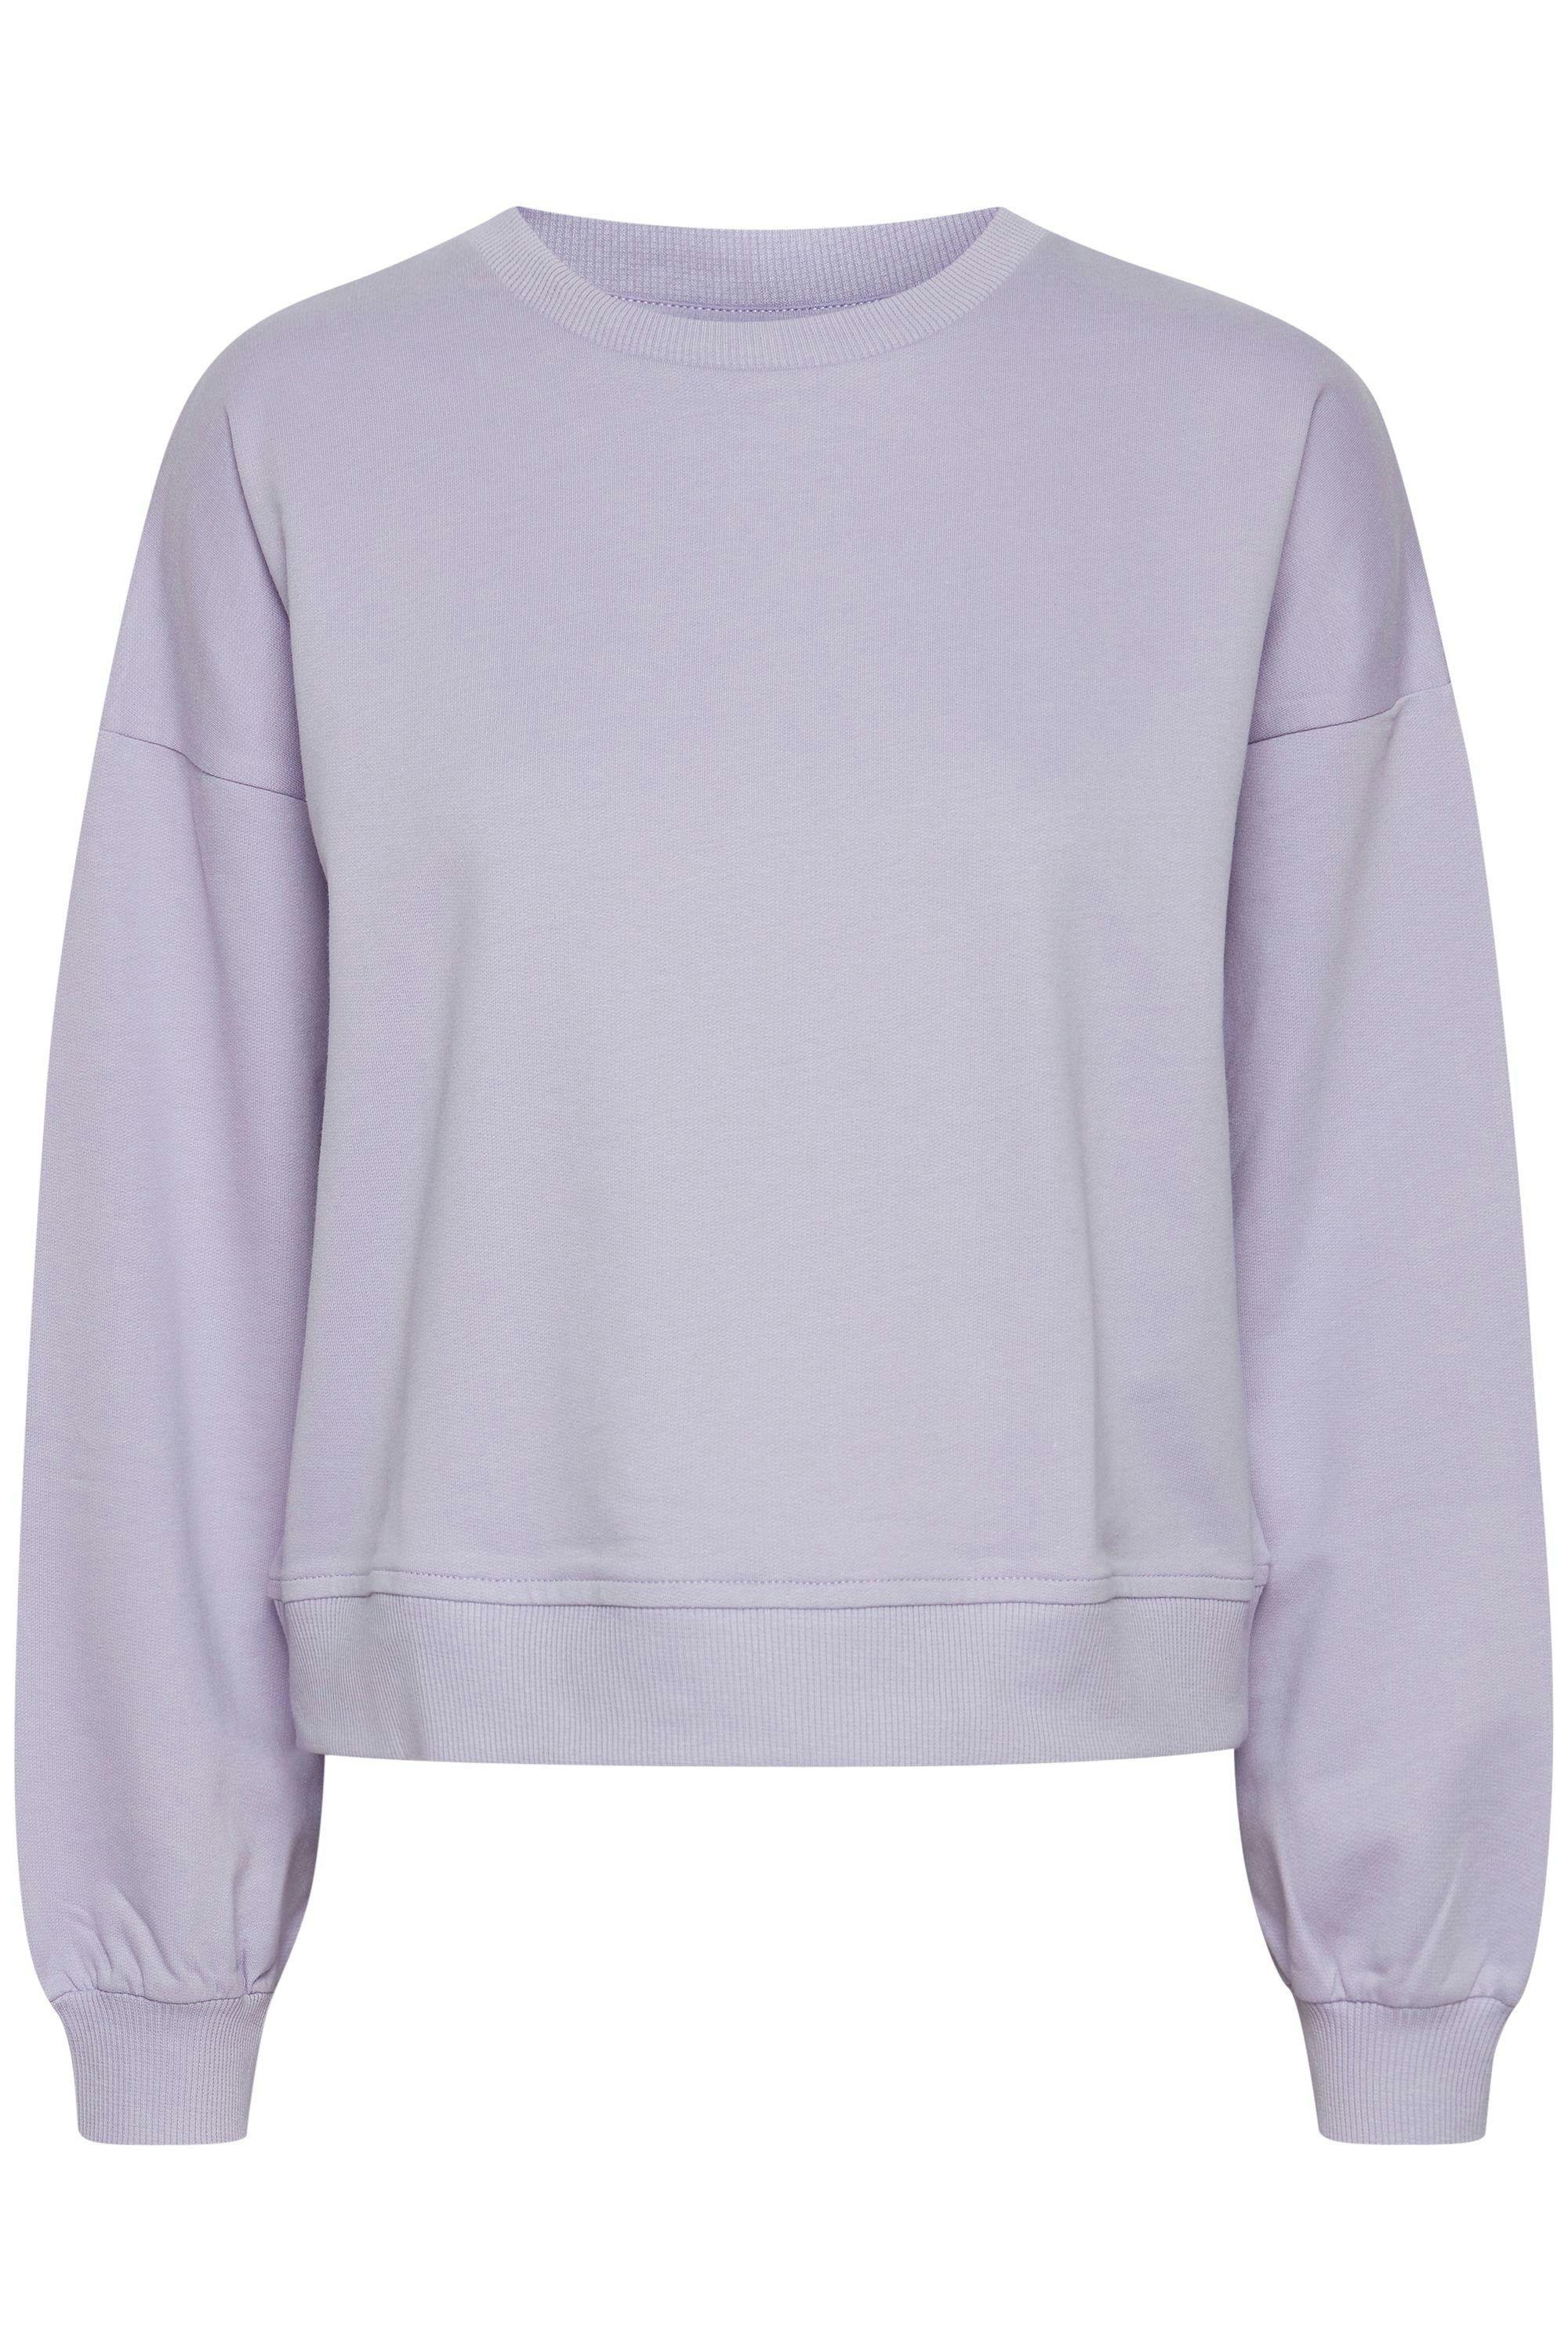 - (163812) IHVEA Sweater in Sweater Ichi Lilac Heirloom SW2 Cropped-Optik 20116000